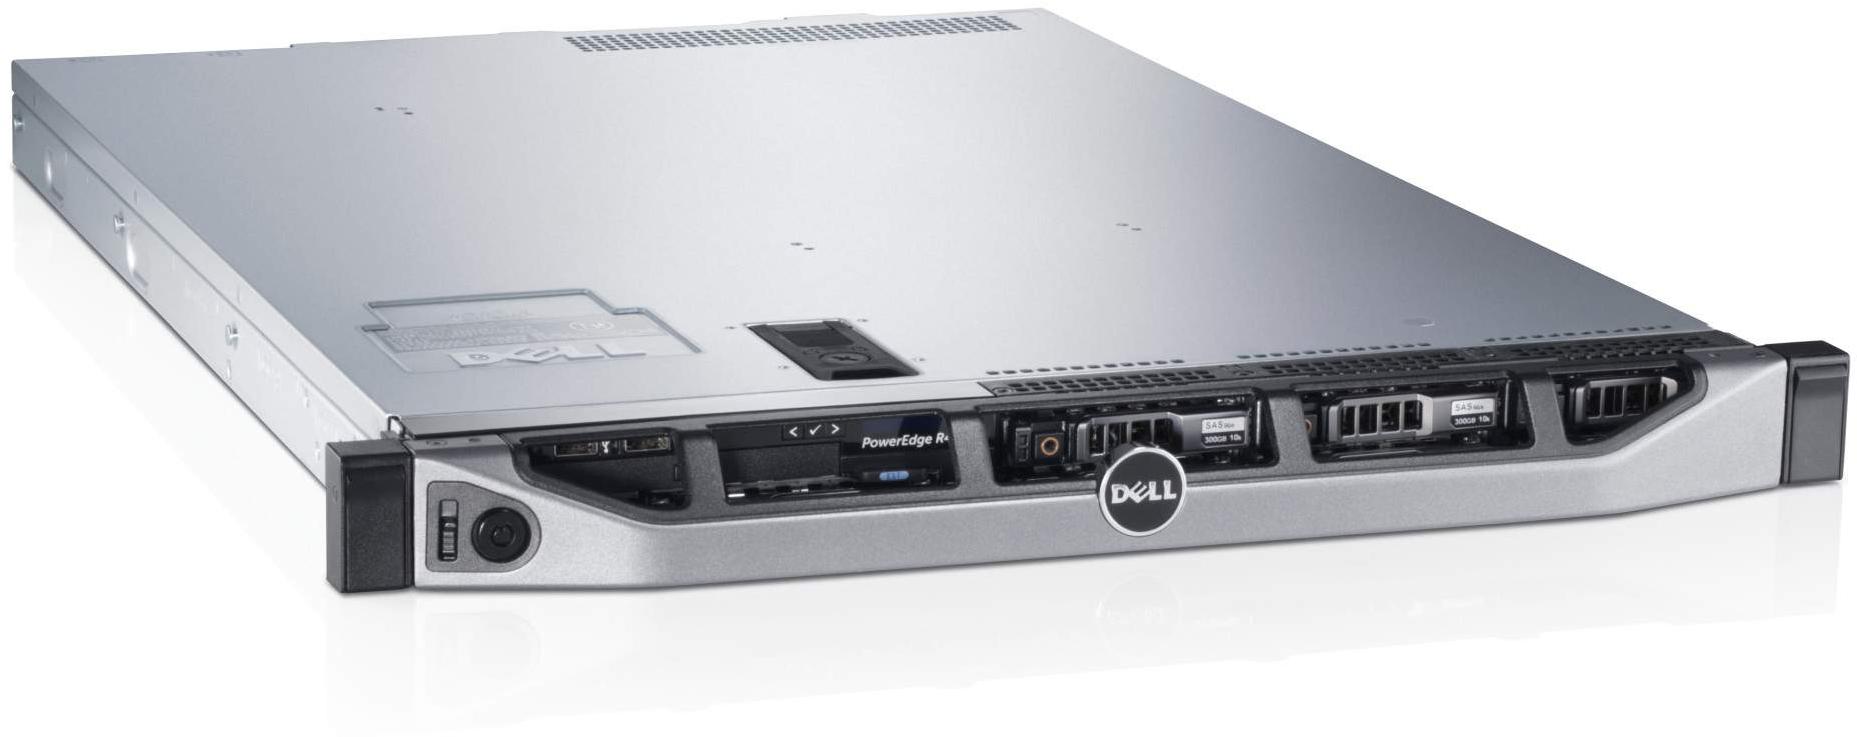     Dell PowerEdge R620 (210-ABMW-40)  2